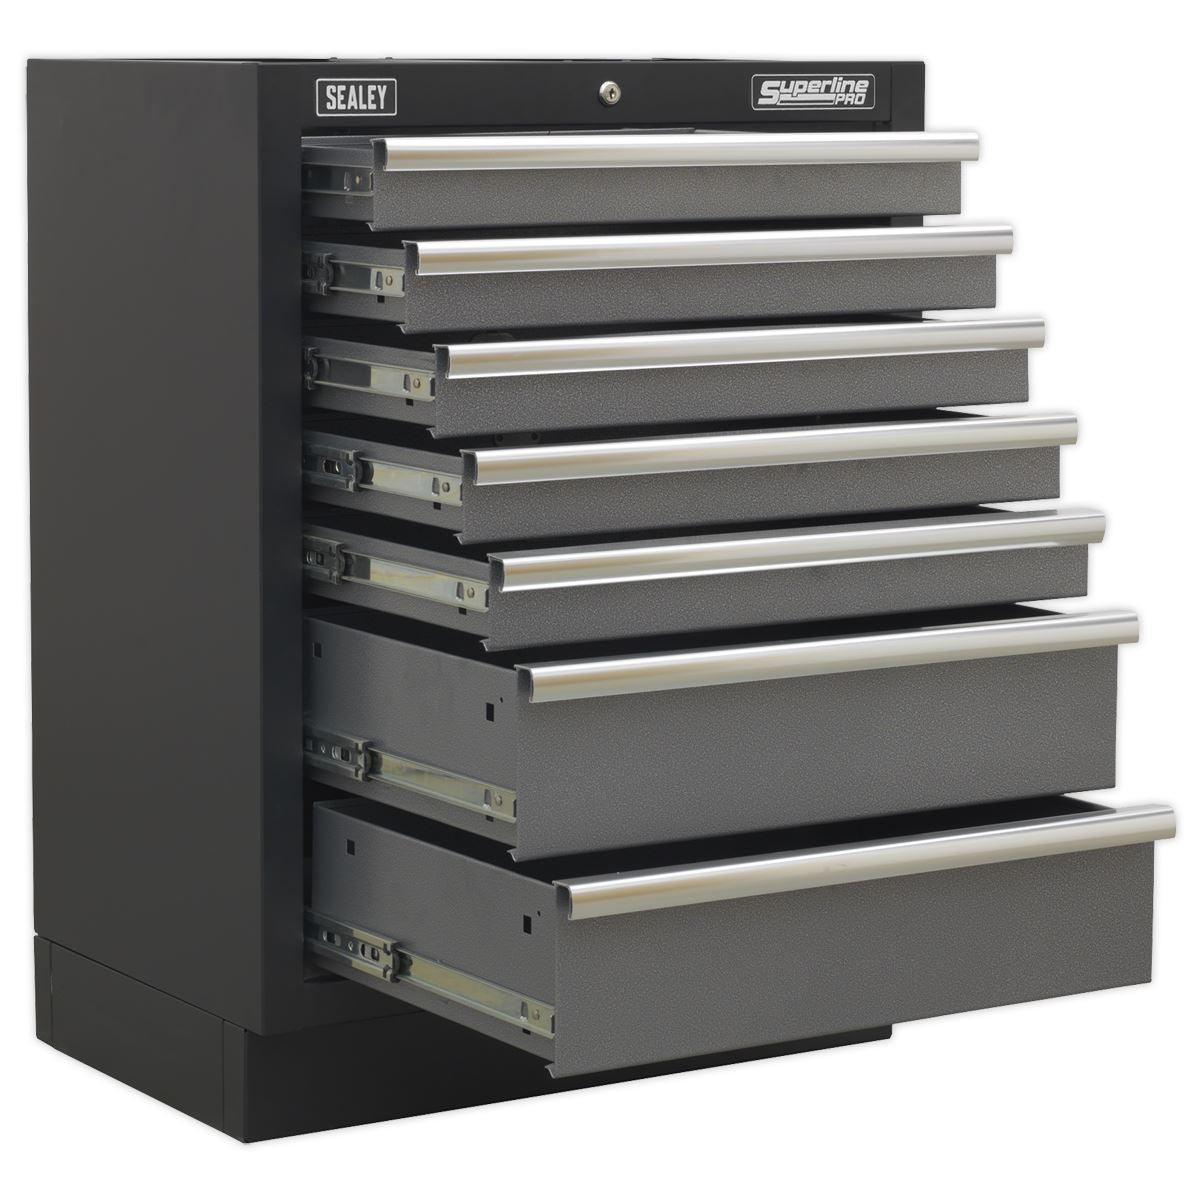 Sealey Superline Pro Modular 7 Drawer Cabinet 680mm